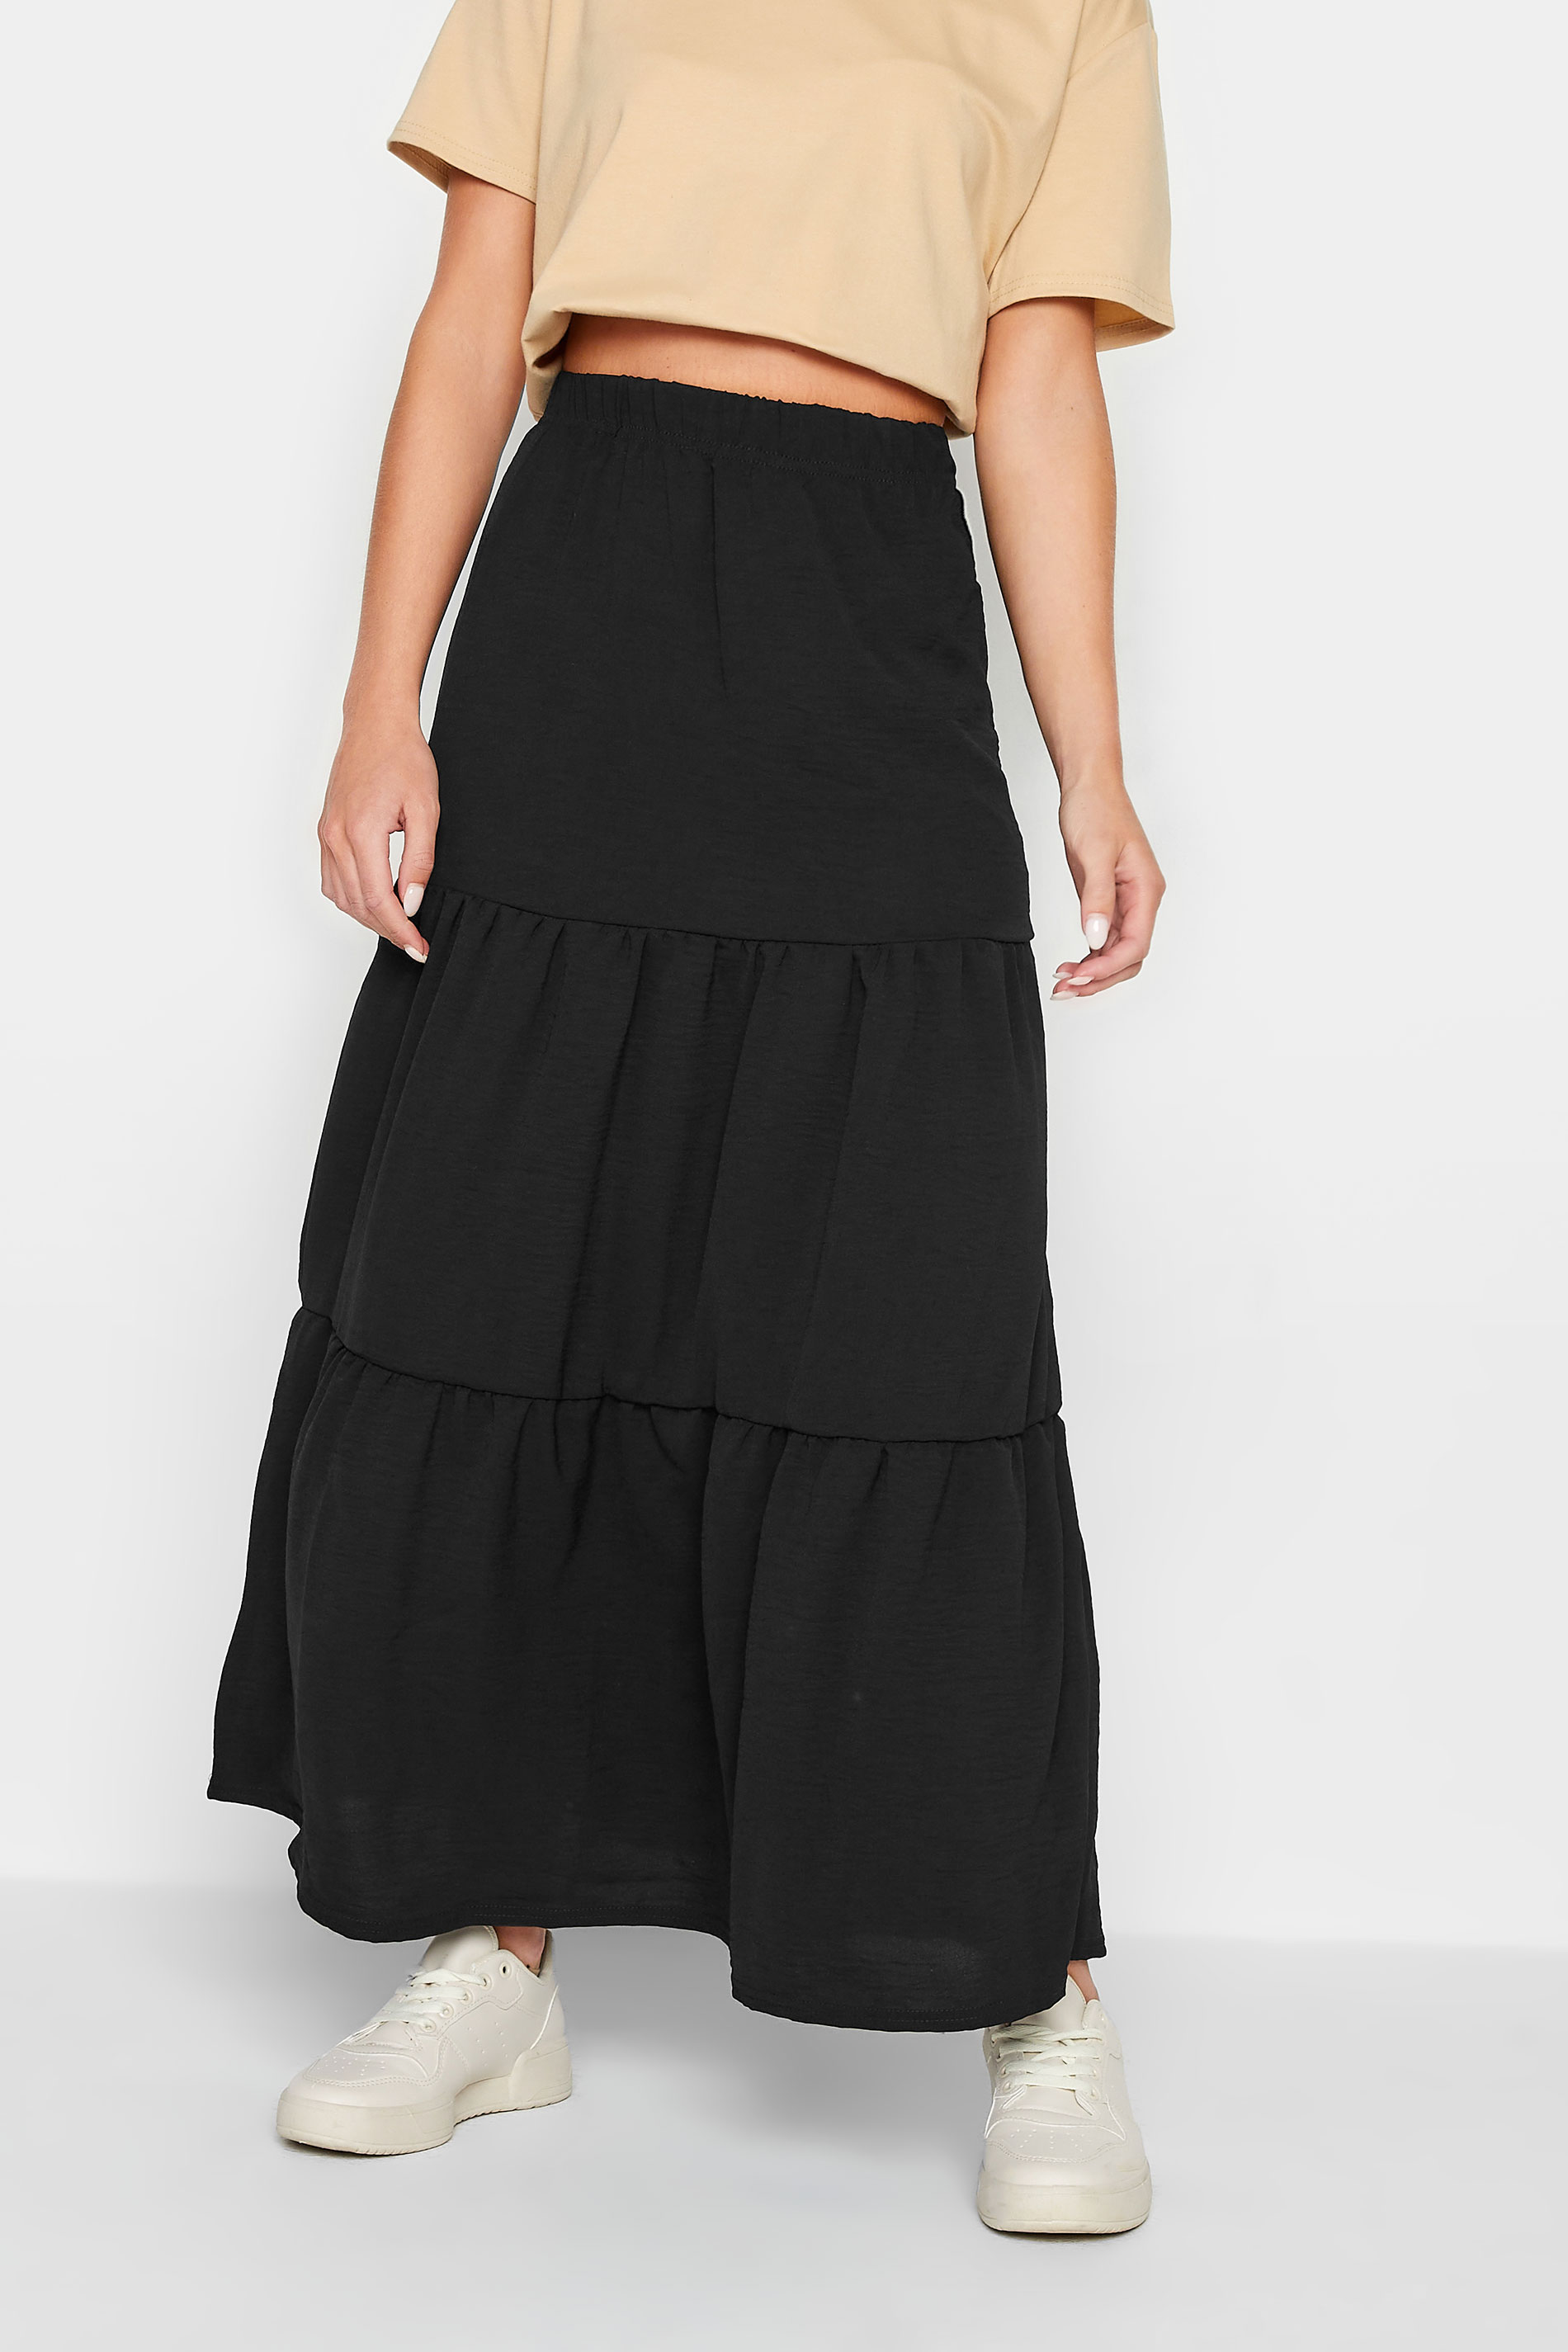 Petite Black Crepe Maxi Skirt | PixieGirl 1